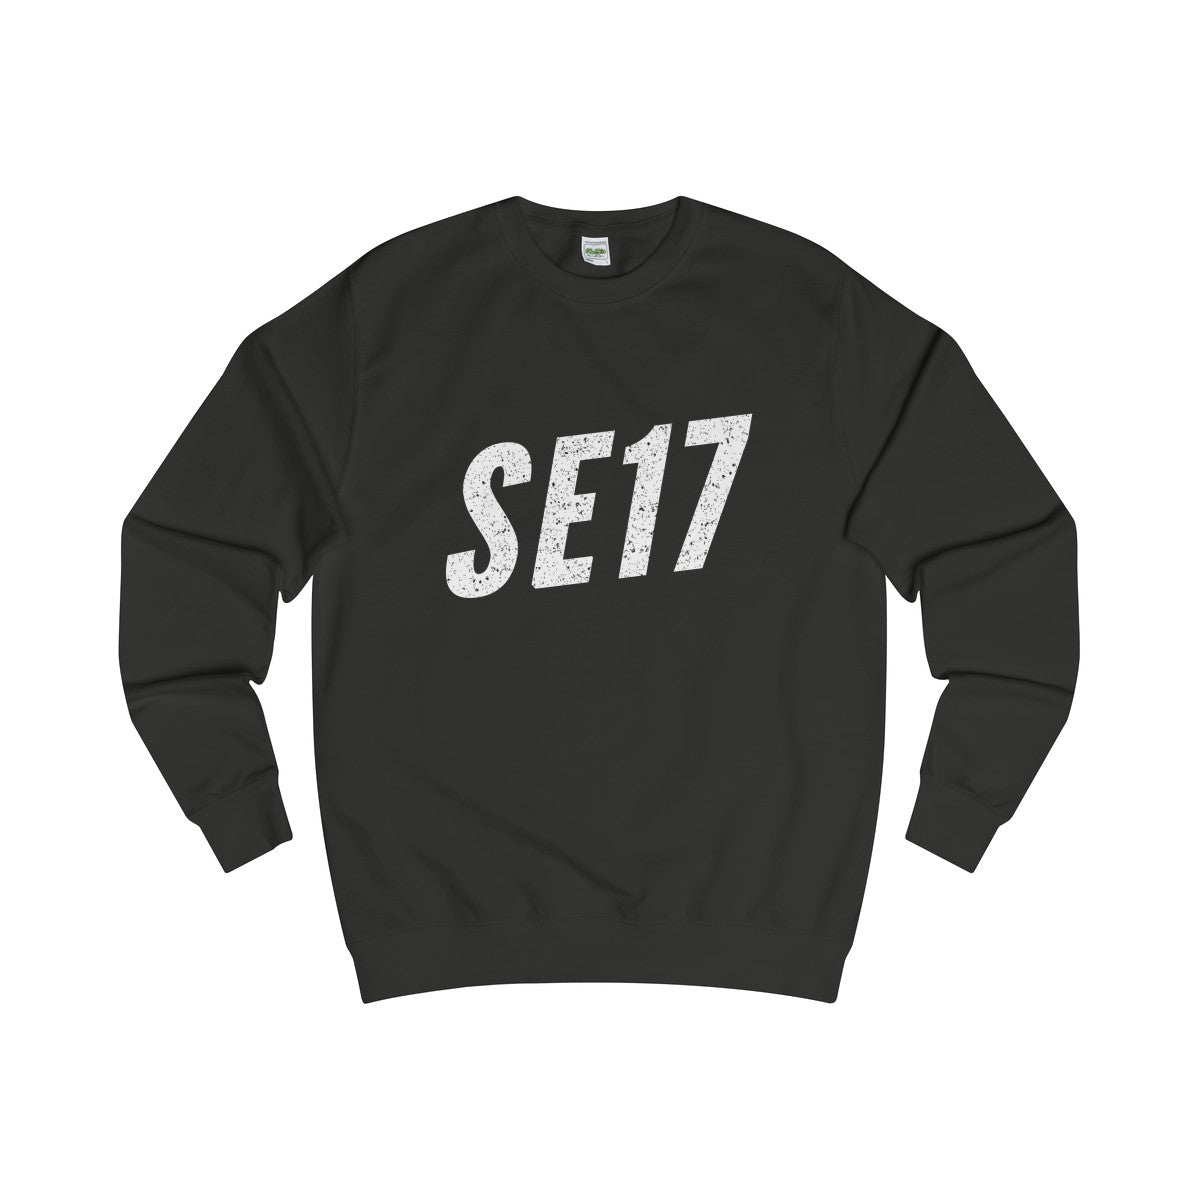 Walworth SE17 Sweater